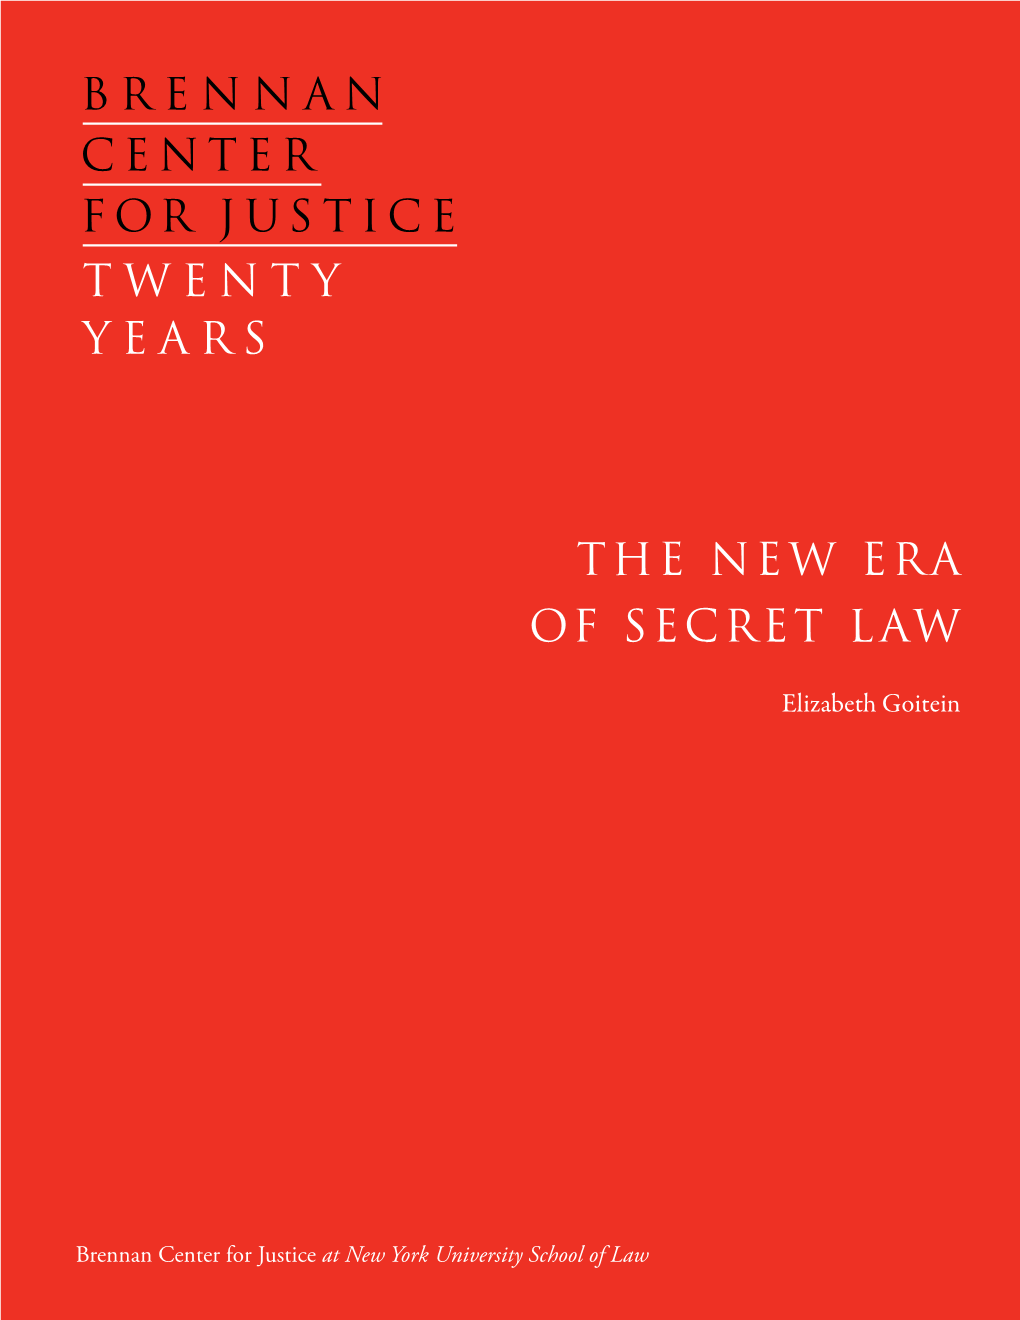 The New Era of Secret Law